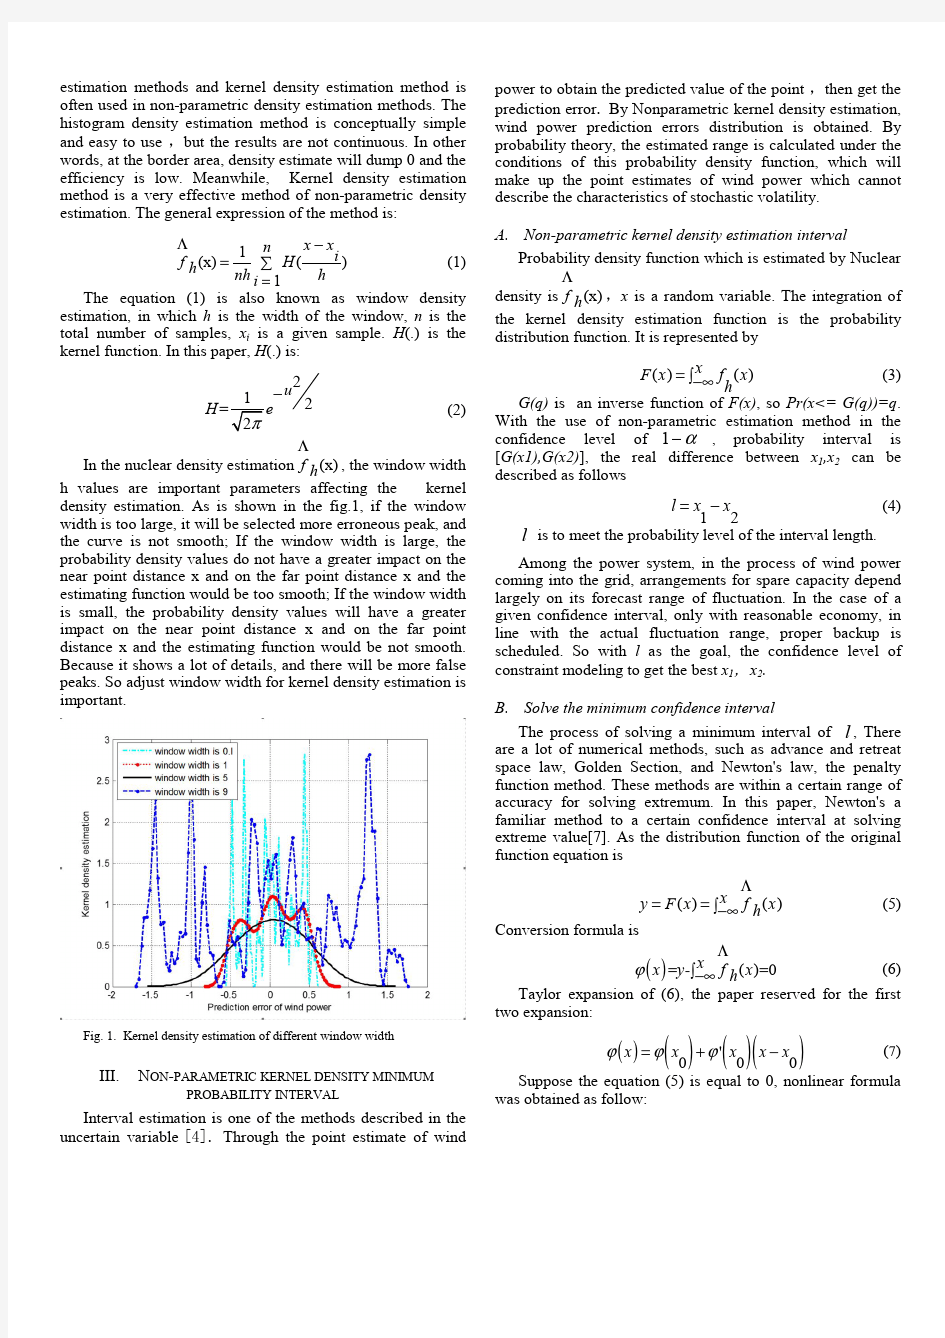 Wind power prediction errors model and Algorithm Based on non-parametric kernel density estimation